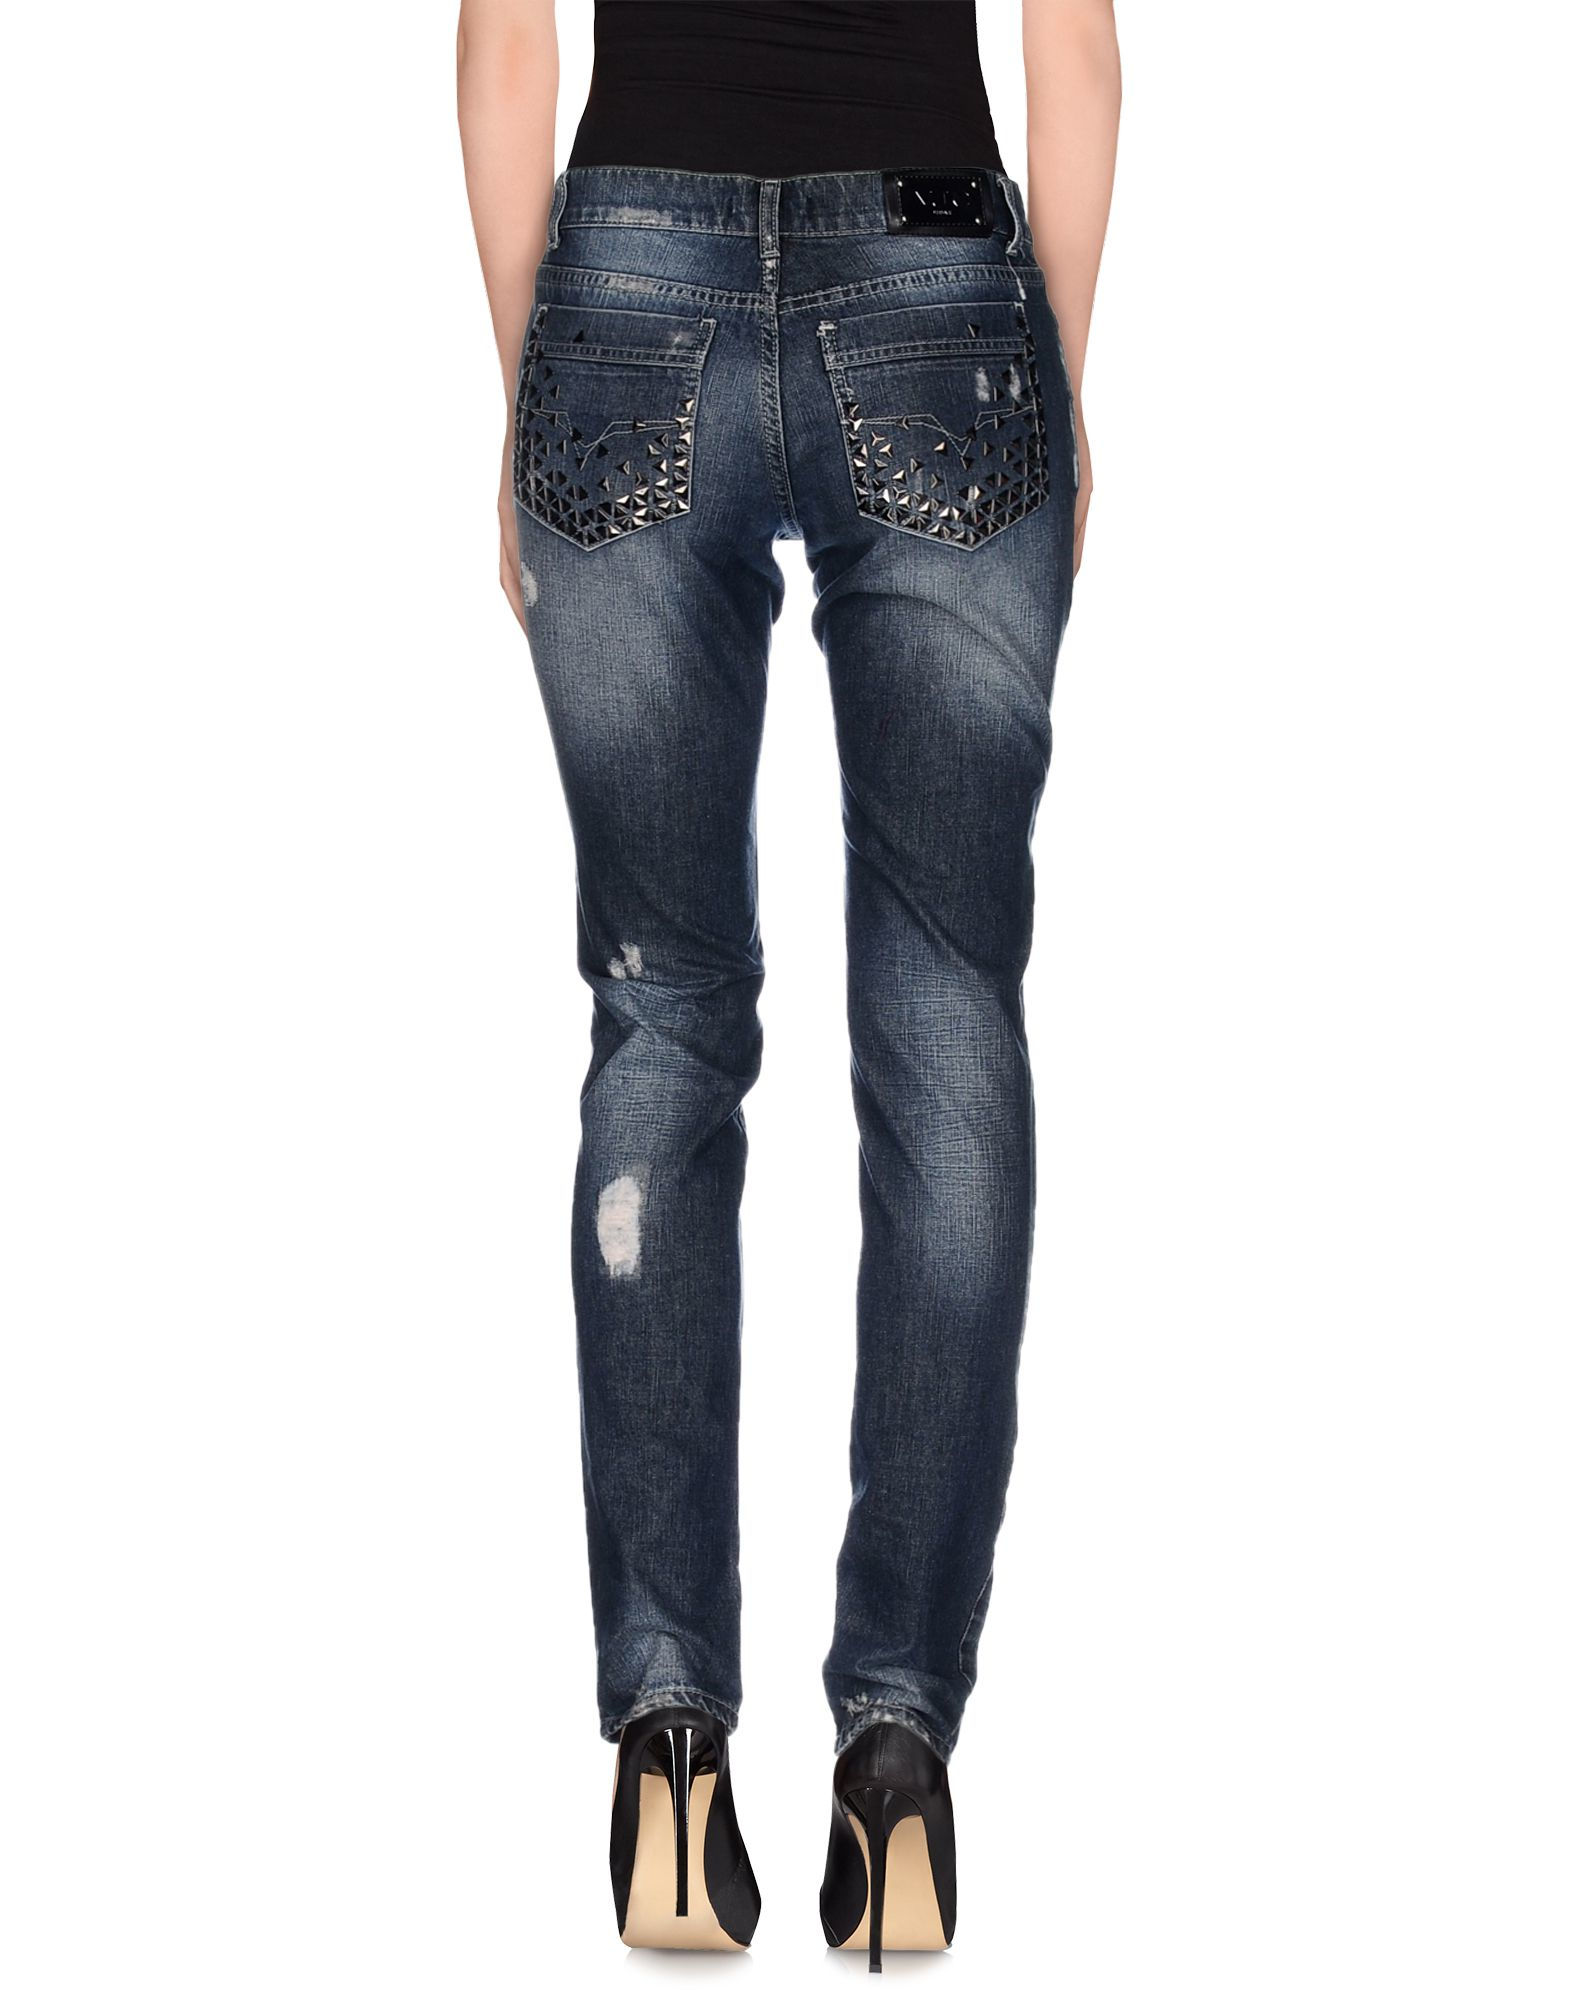 Lyst - Versace Jeans Denim Trousers in Blue